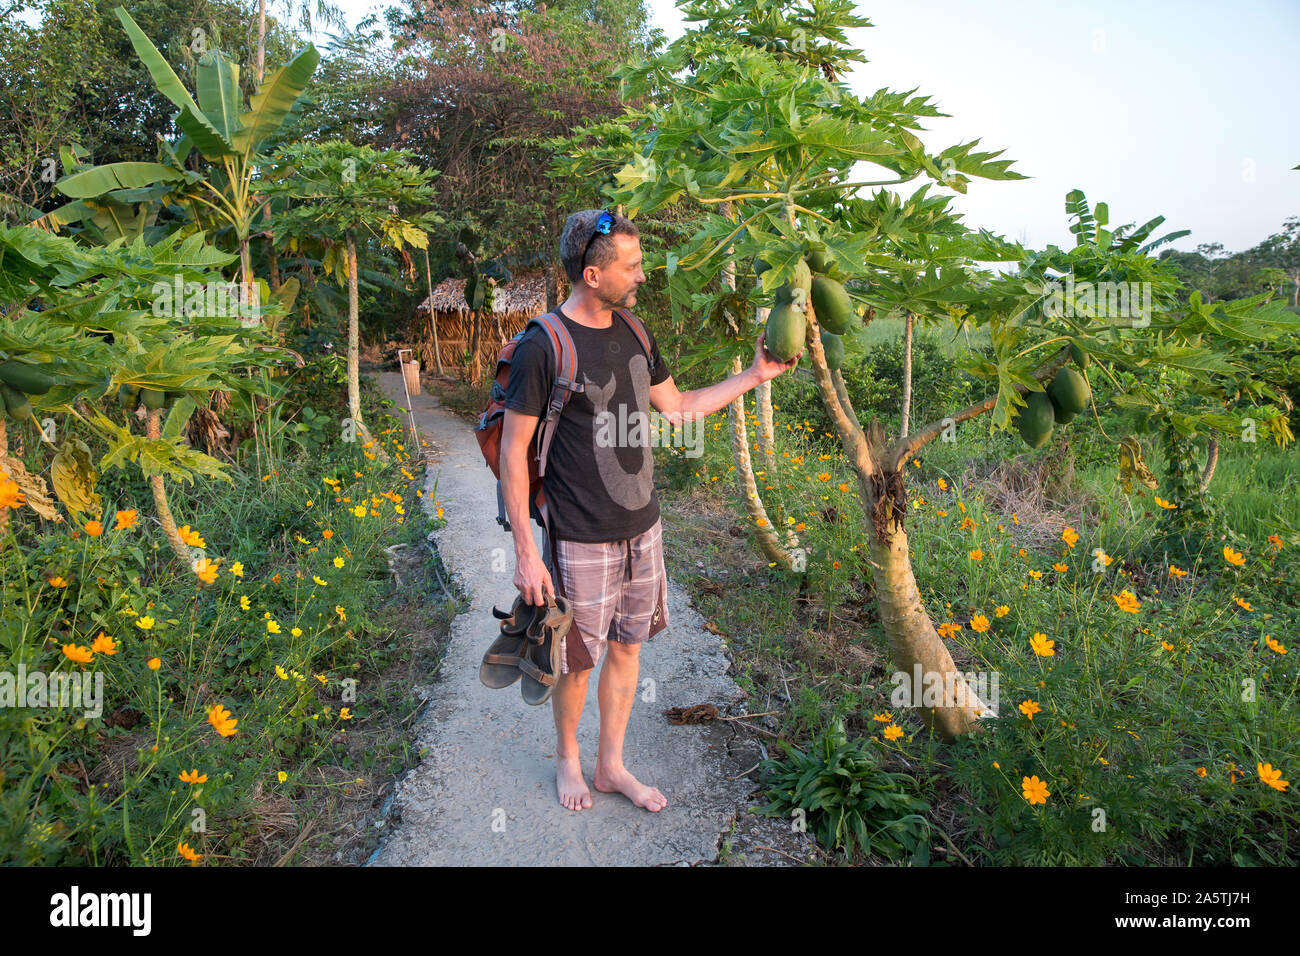 A man examines papayas in a lush Vietnamese setting. Stock Photo